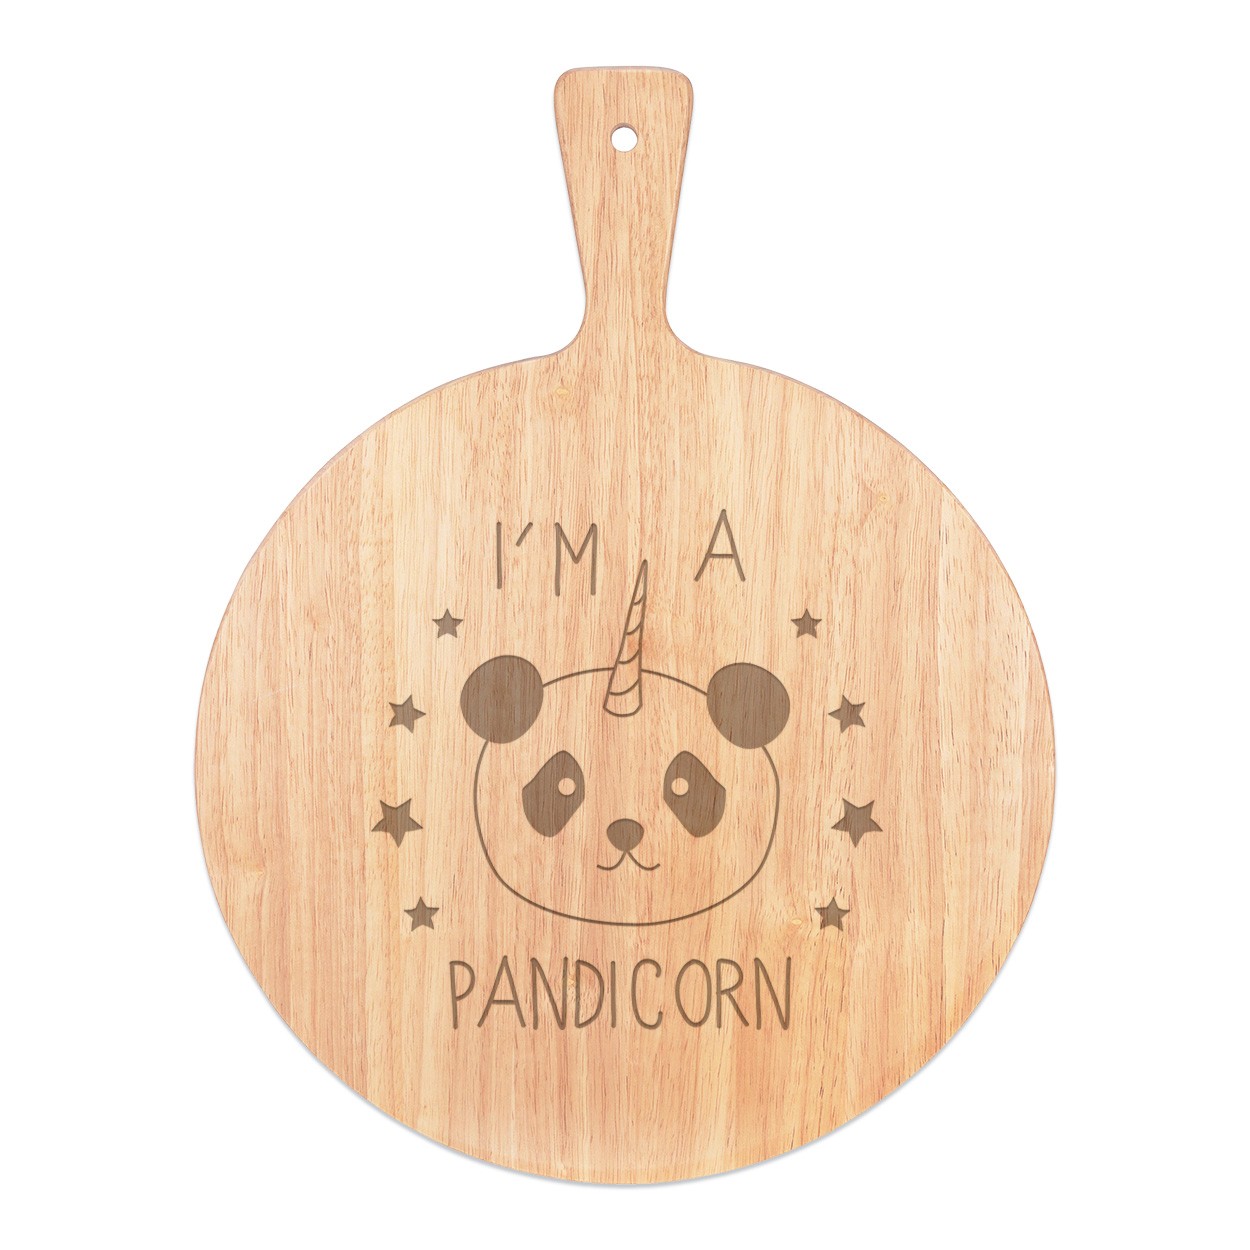 I'm A Pandicorn Unicorn Pizza Board Paddle Serving Tray Handle Round Wooden 45x34cm